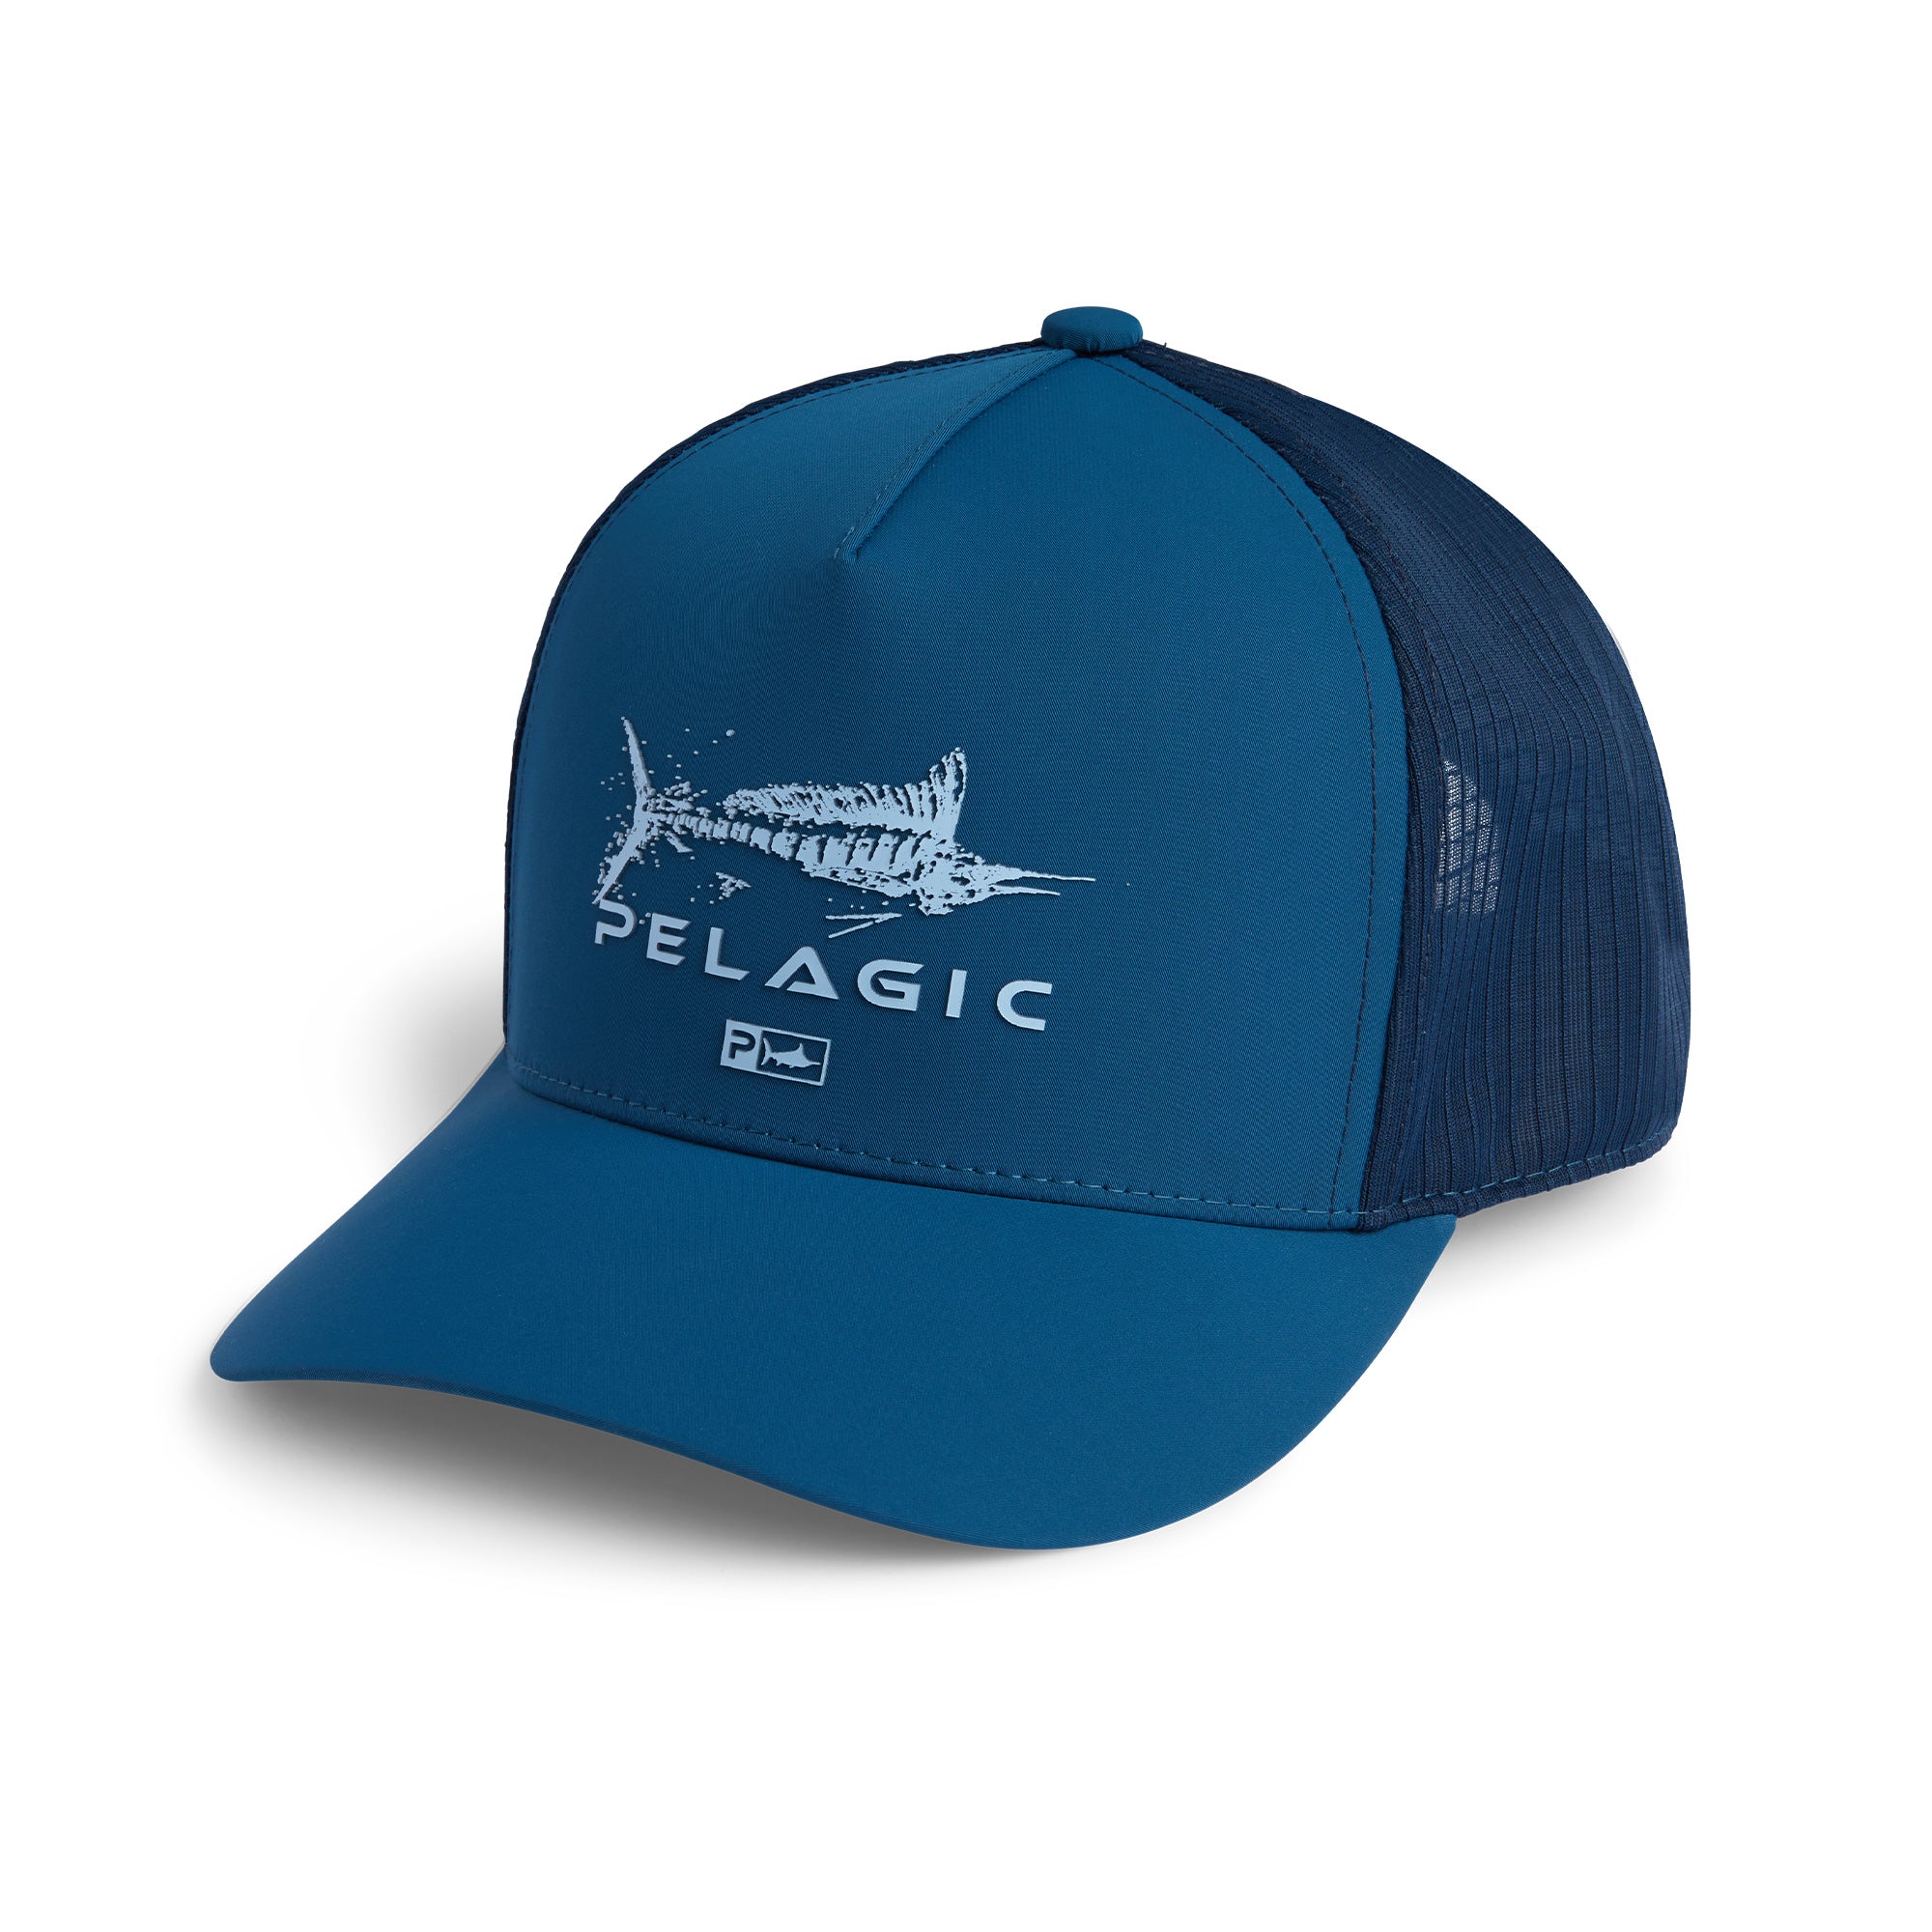 Pelagic Echo Gyotaku Performance Trucker Hat Blue / Os